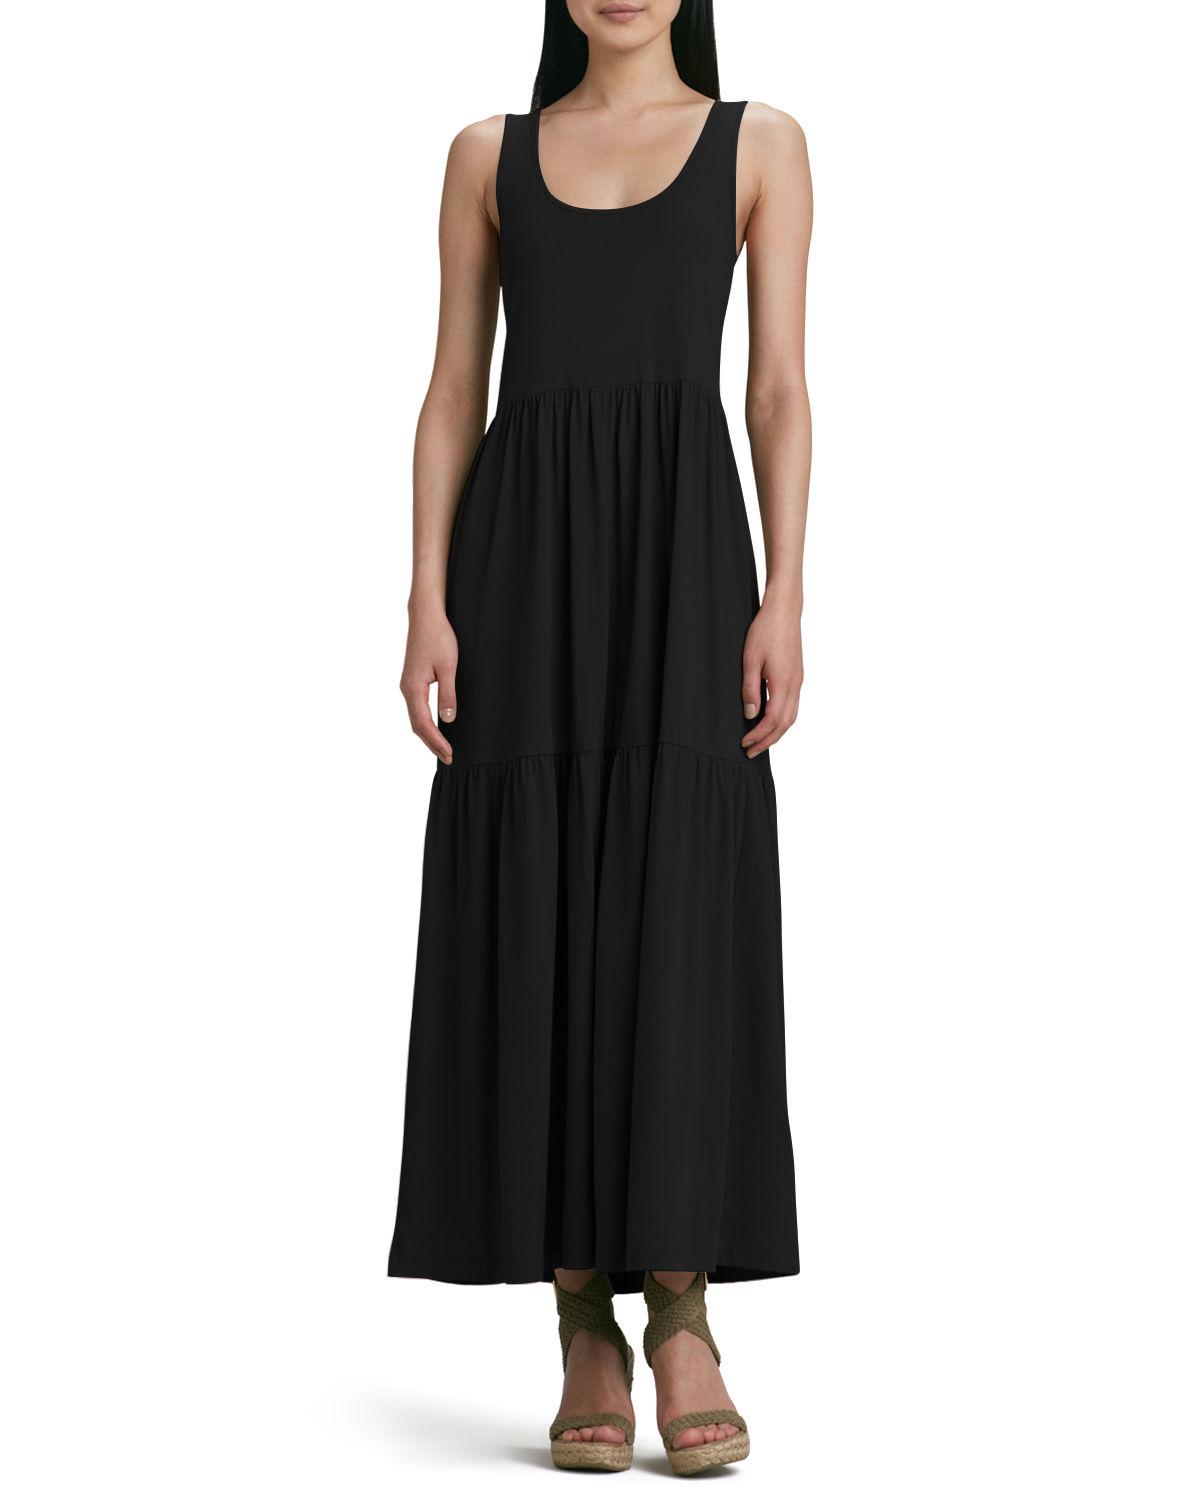 Joan Vass Petite Tiered Long Tank Dress in Black (Natural) - Lyst